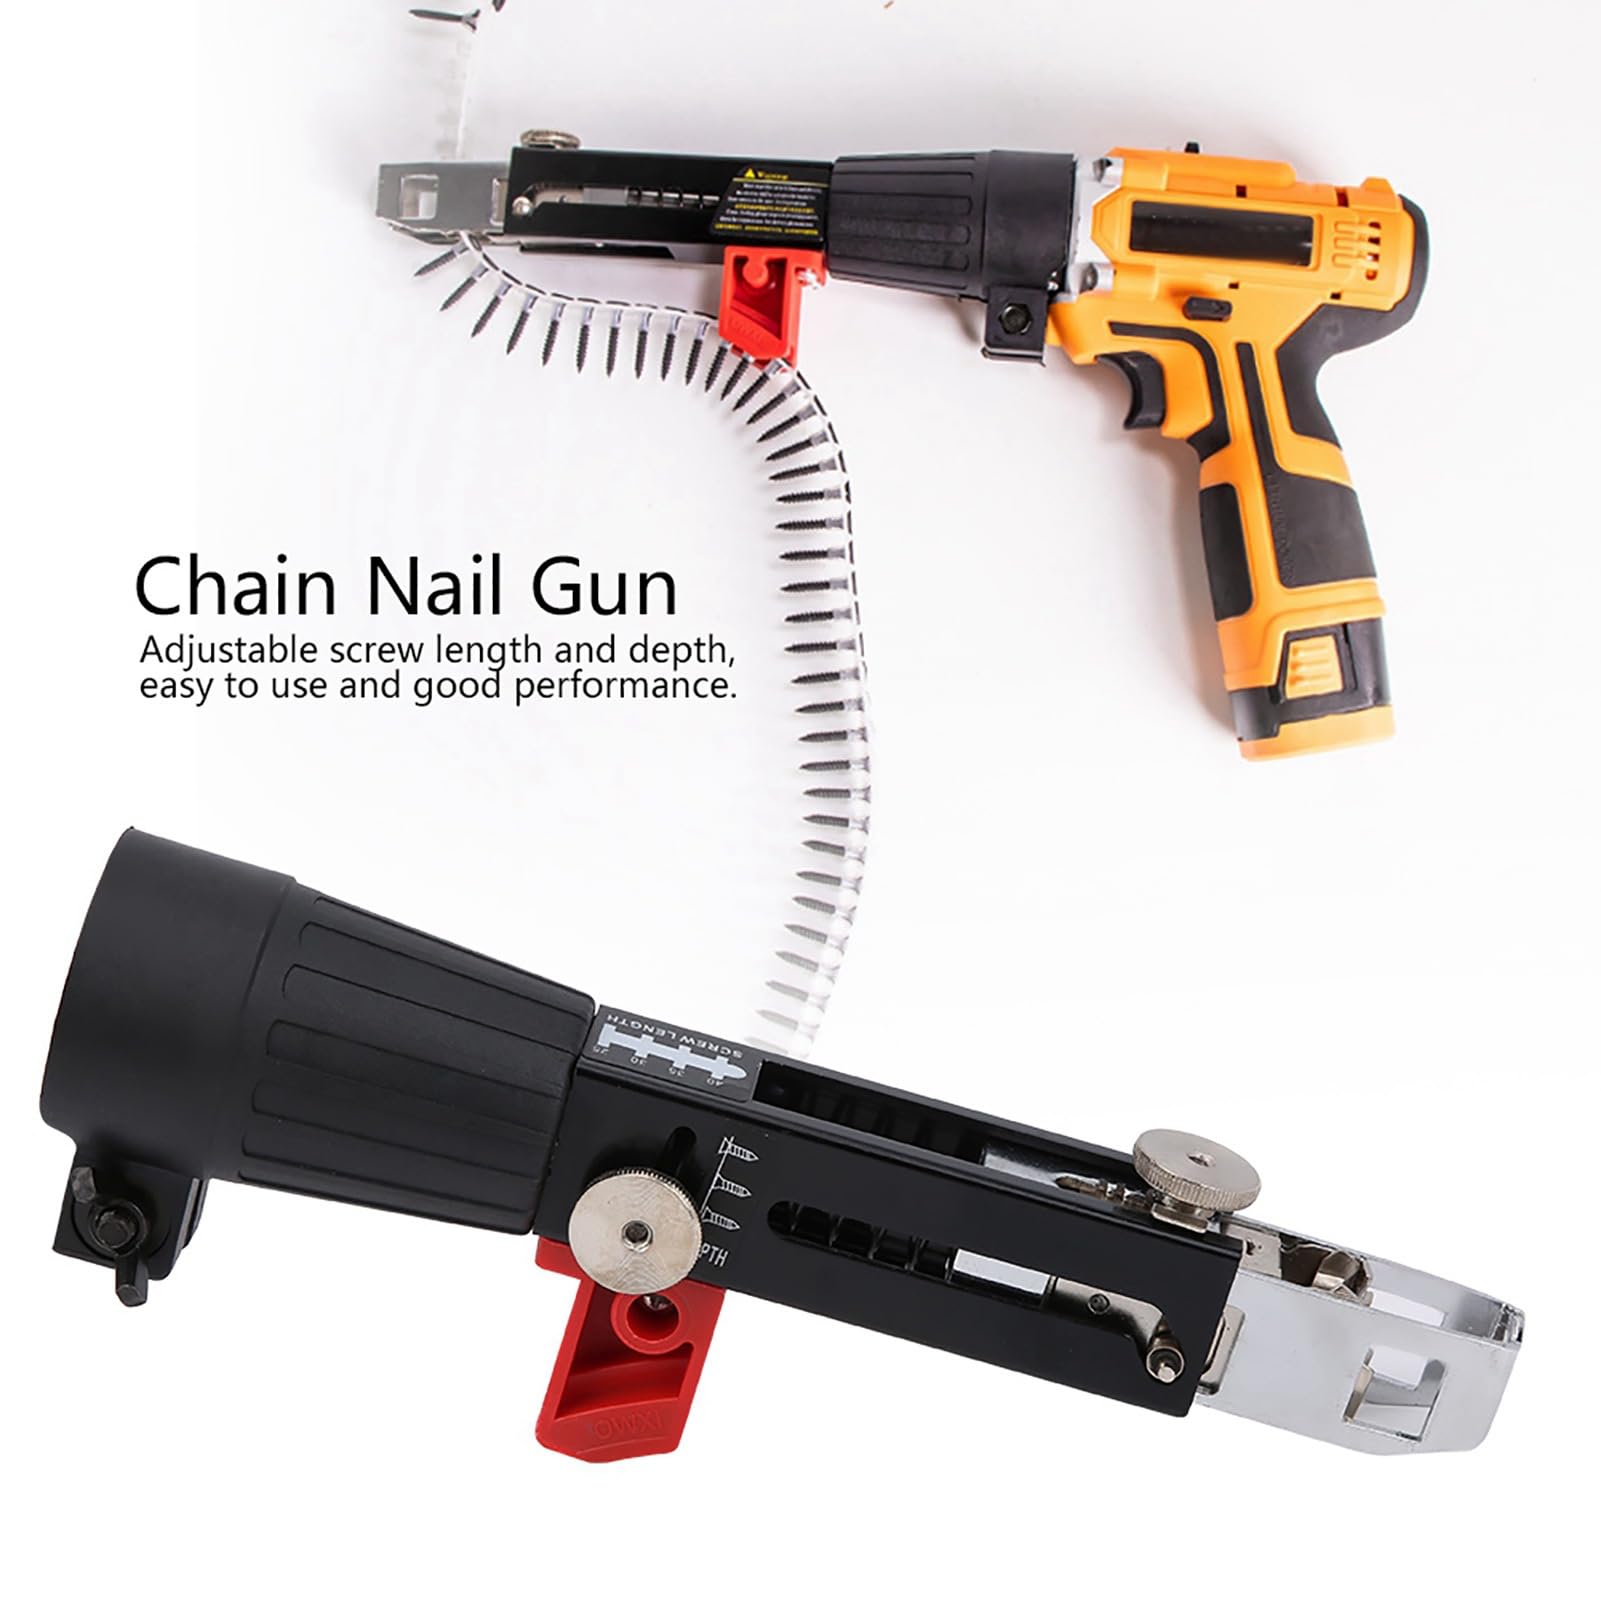 Thincol Screw Drill Chain Adapter for Power Drill Gun, 41mm-46mm Chuck Range Woodwork Rotary Screw Gun Attachment for Drywall Wood Board Ceiling, Nail Gun Collating